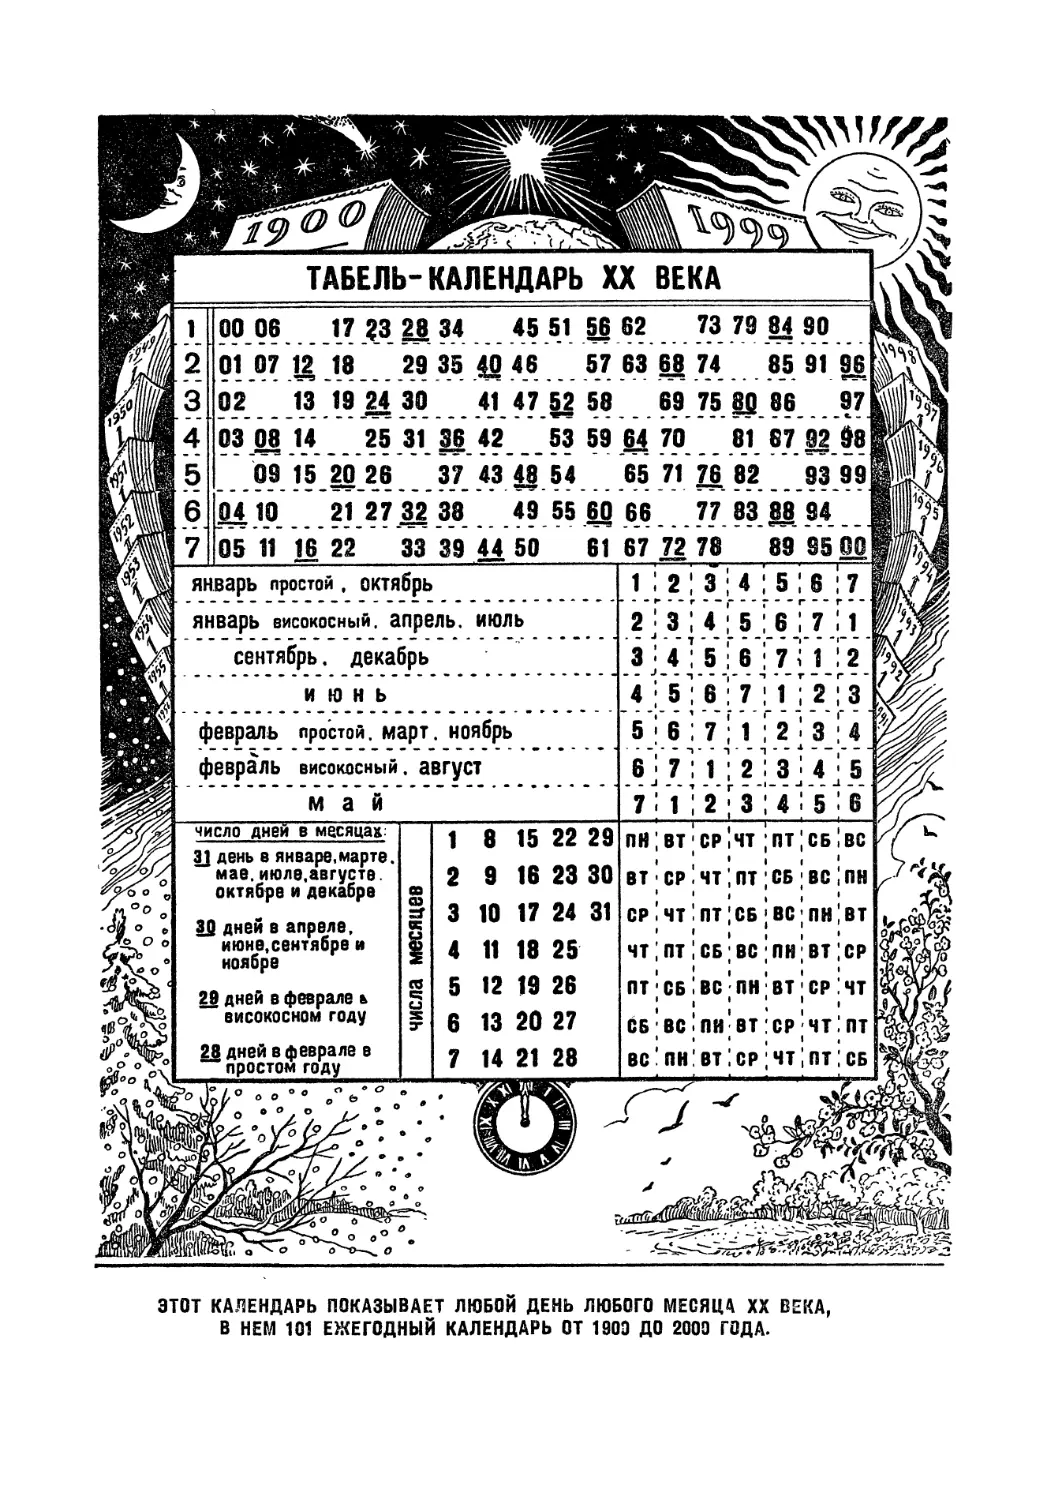 Табель-календарь XX века